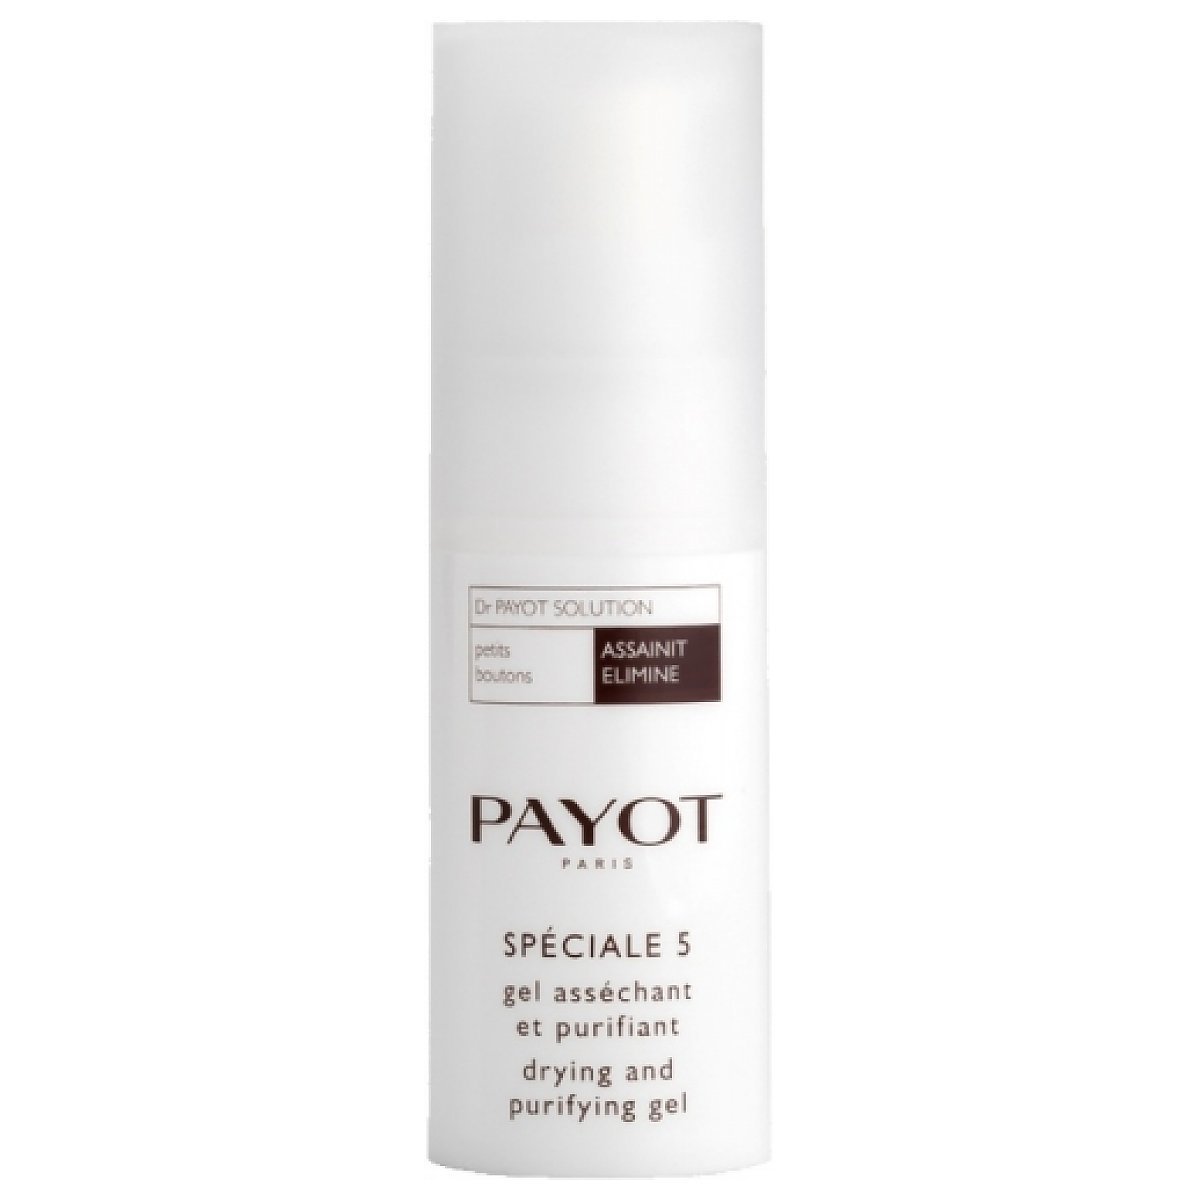 Payot gel. Payot. Payot очищающий гель. Payot purifiant лосьон. Гель для жирной кожи лица от Payot.